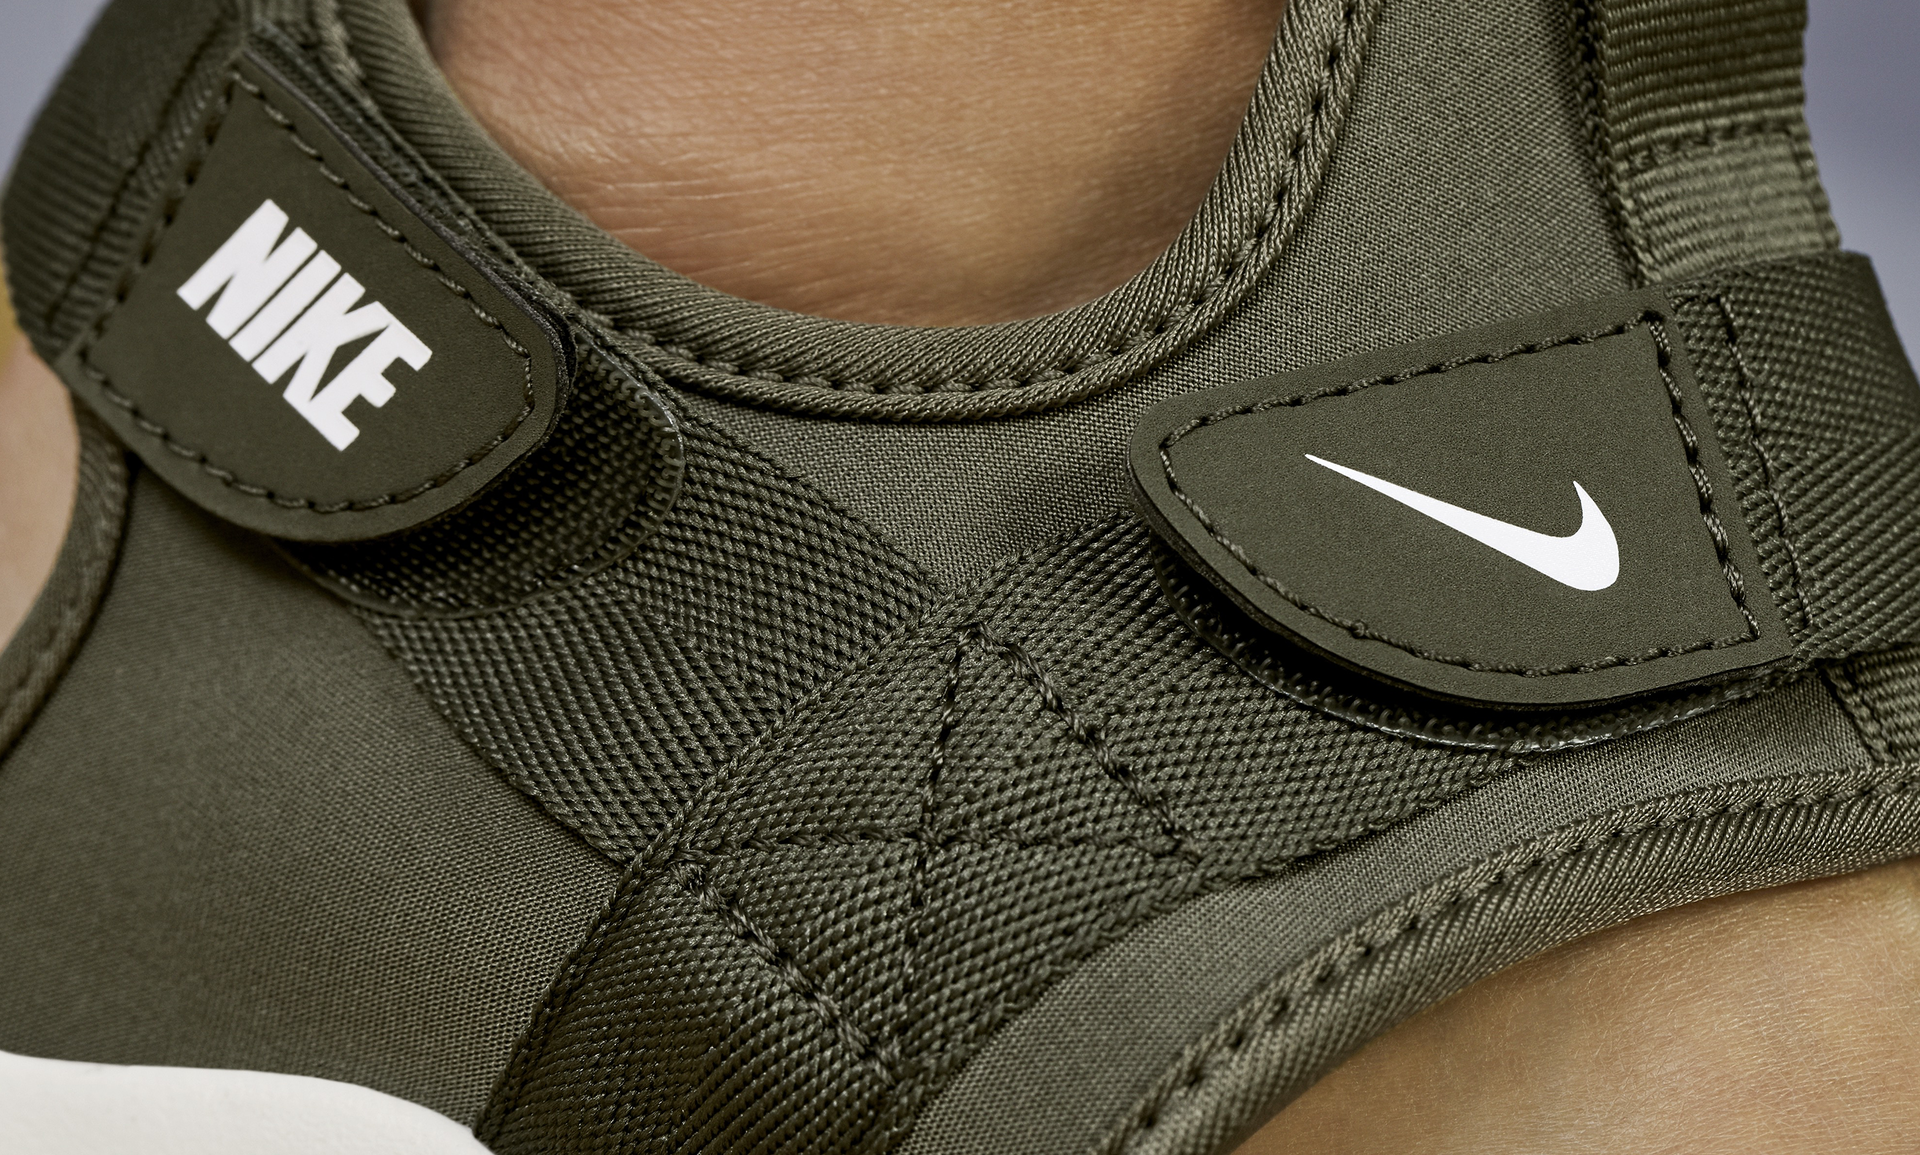 Nike Canyon Men's Sandals. Nike.com